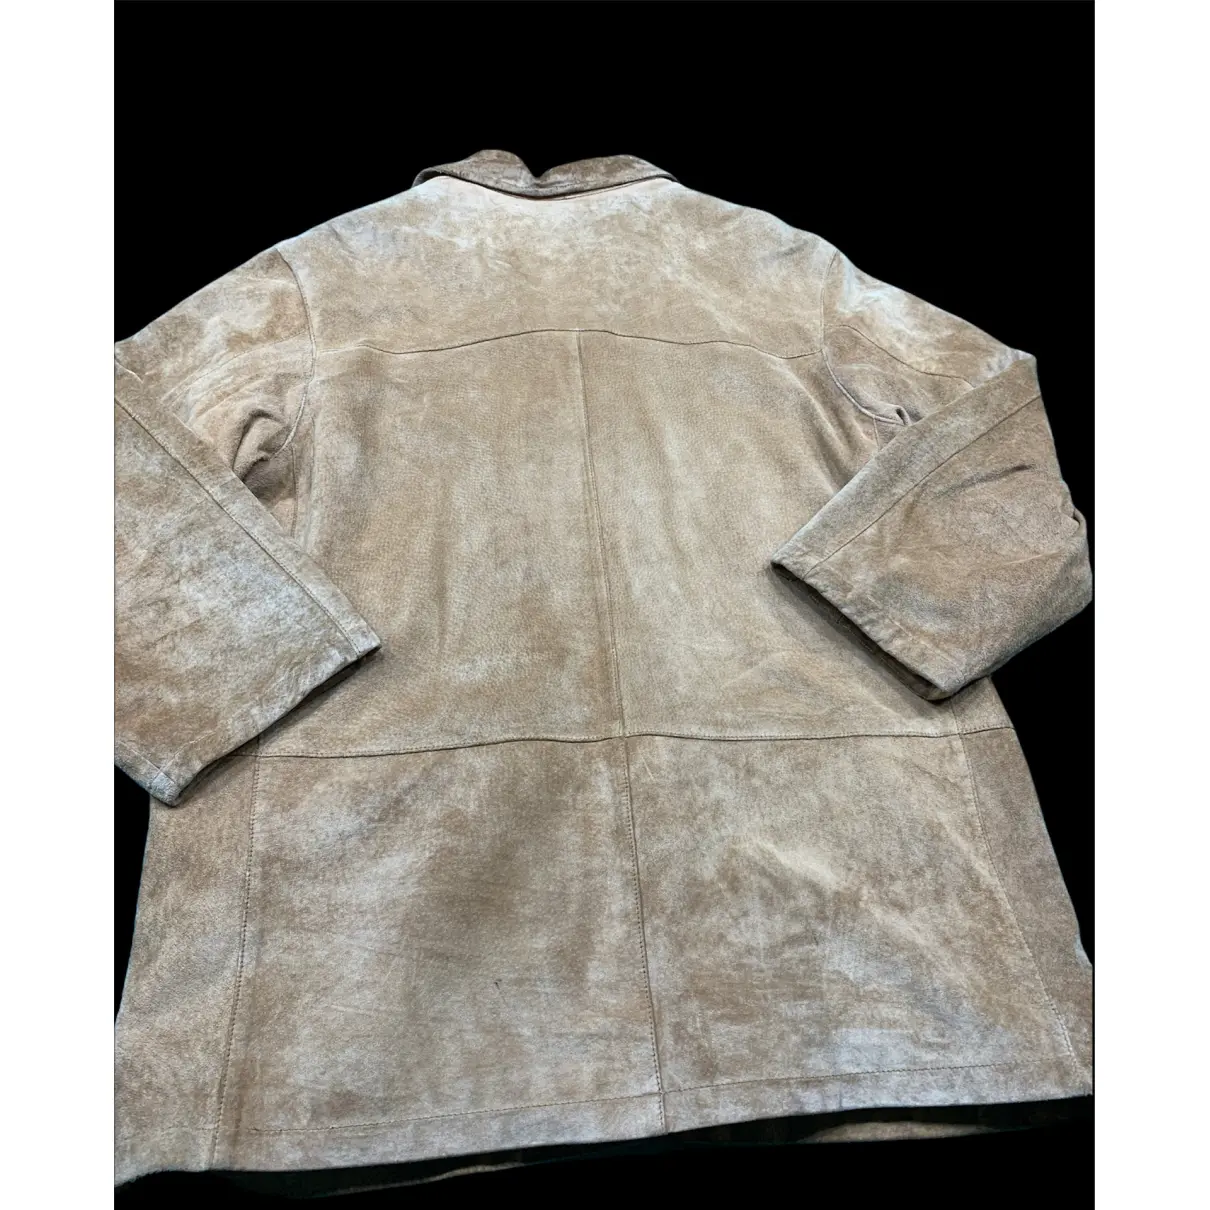 Buy VERRA PELLE Leather vest online